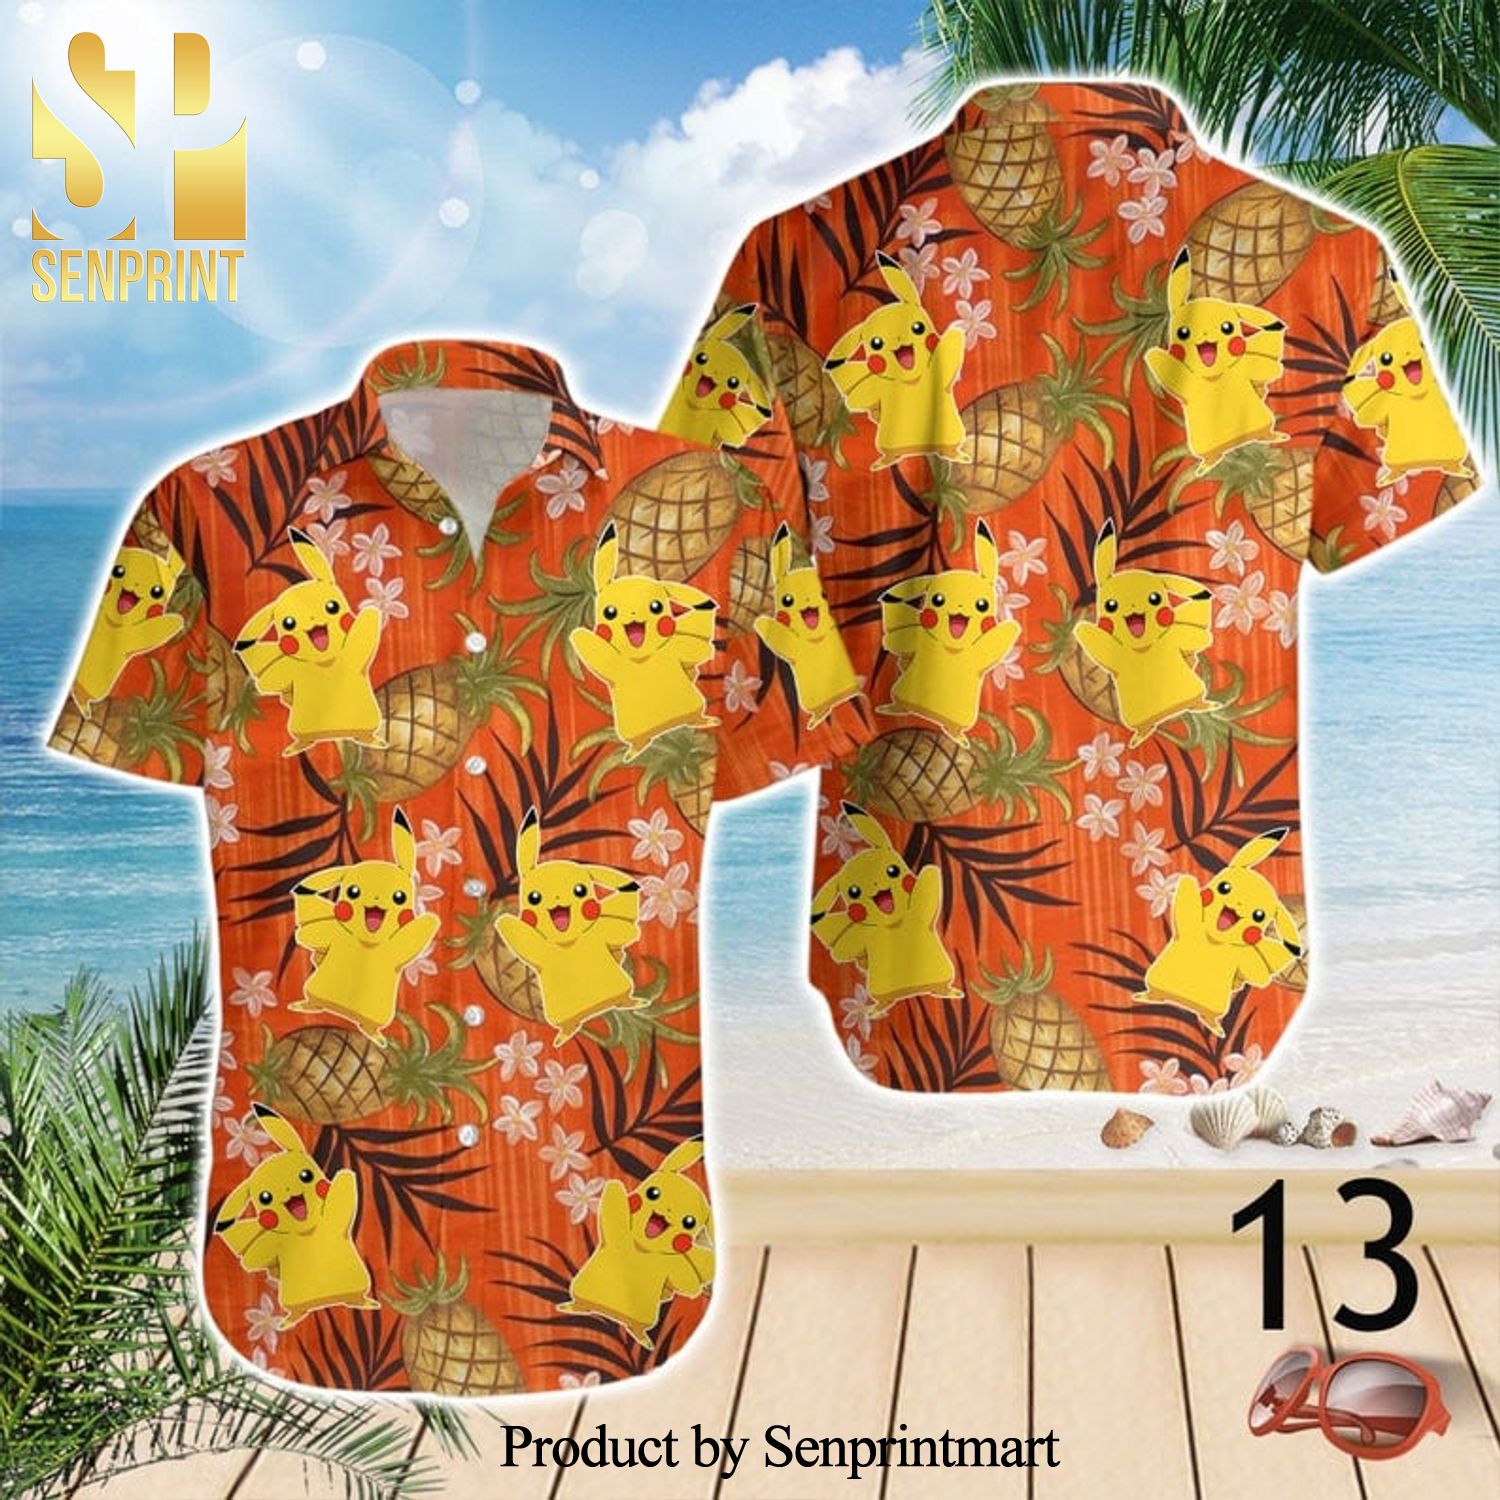 Why do we love Pikachu Pokemon Go Hawaiian shirt?